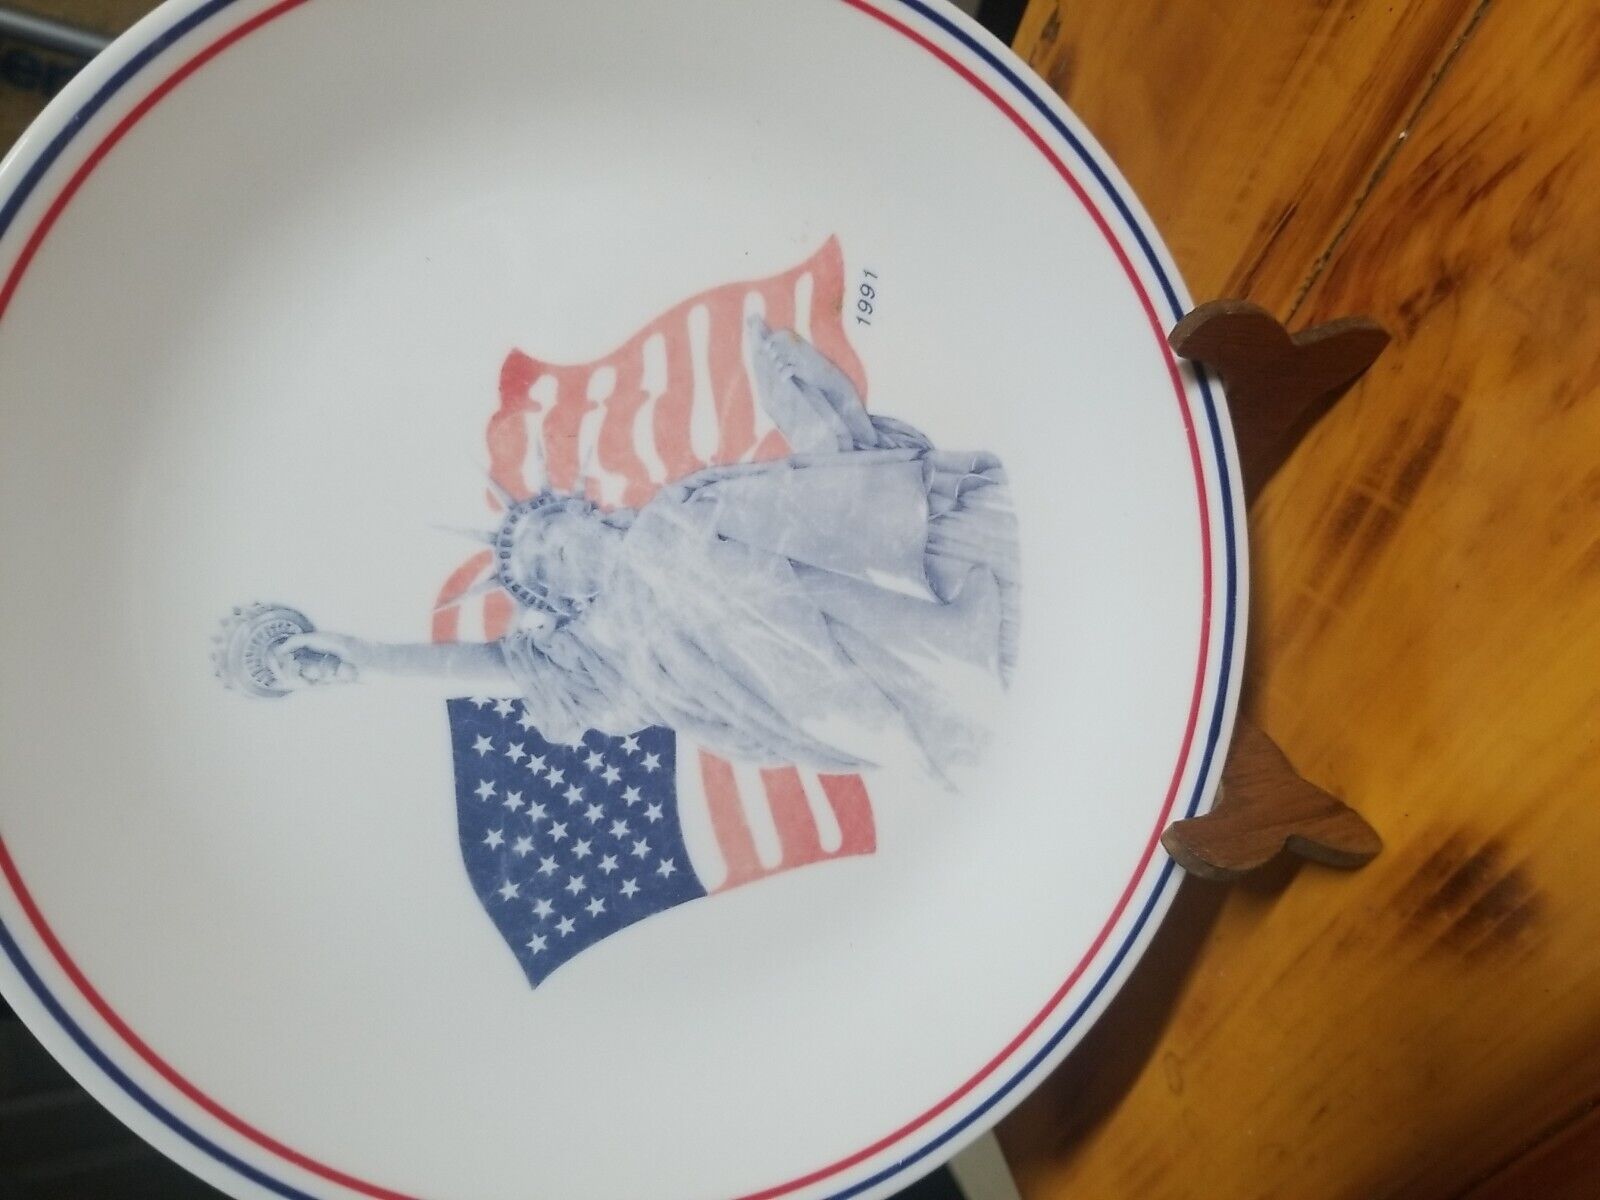 CORELLE - STATUE OF LIBERTY - AMERICAN FLAG - 1991 COMMEMORATIVE DINNER PLATE